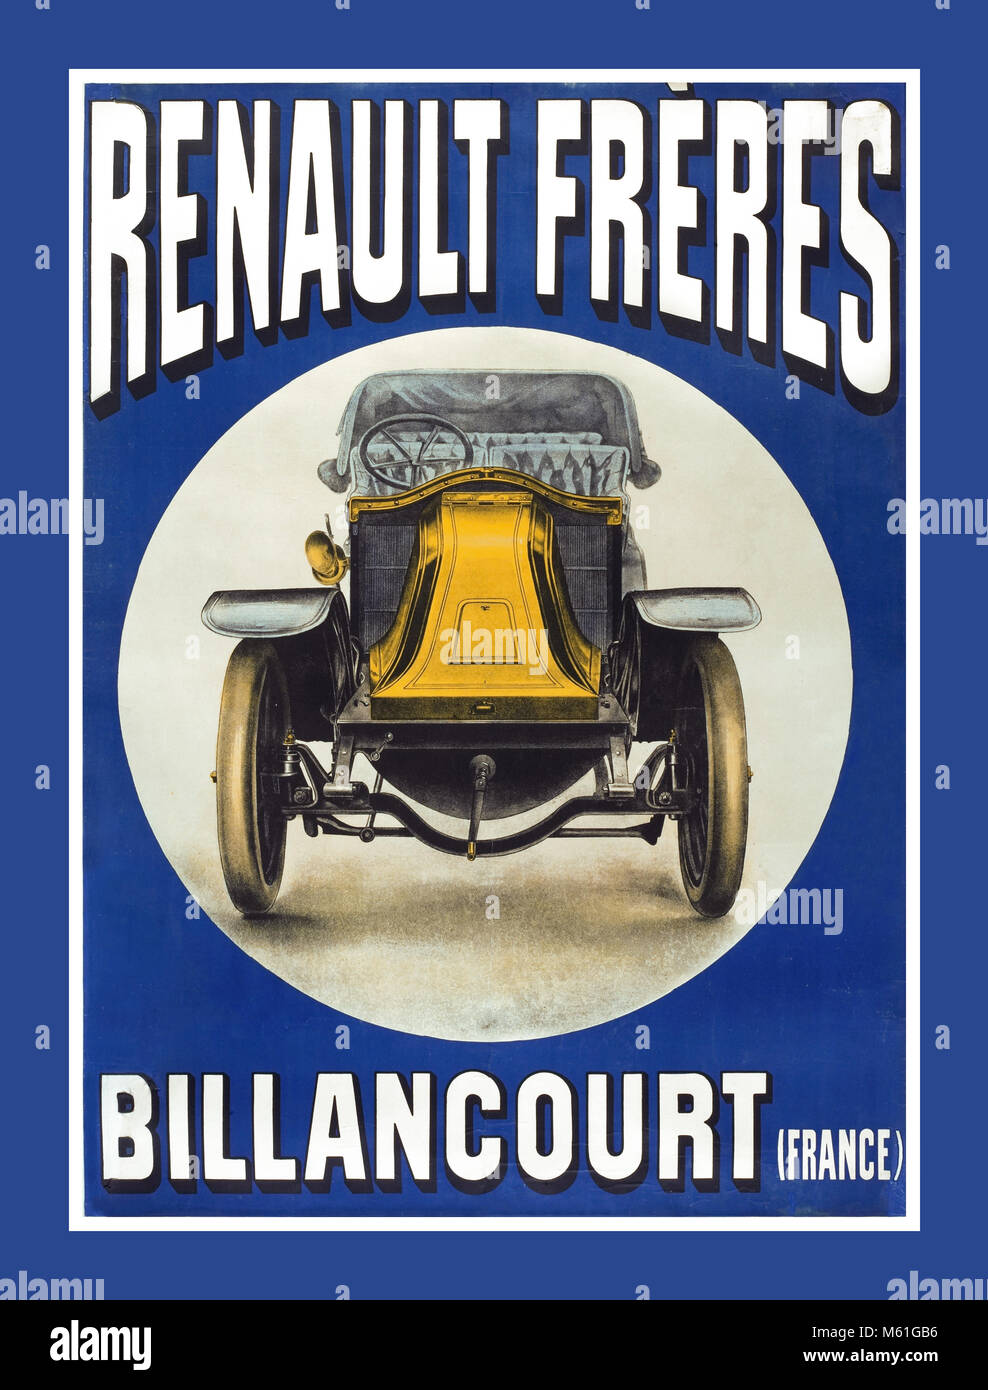 Vintage 1908 Renault Freres Billancourt (France) poster Motorcar automobile Stock Photo